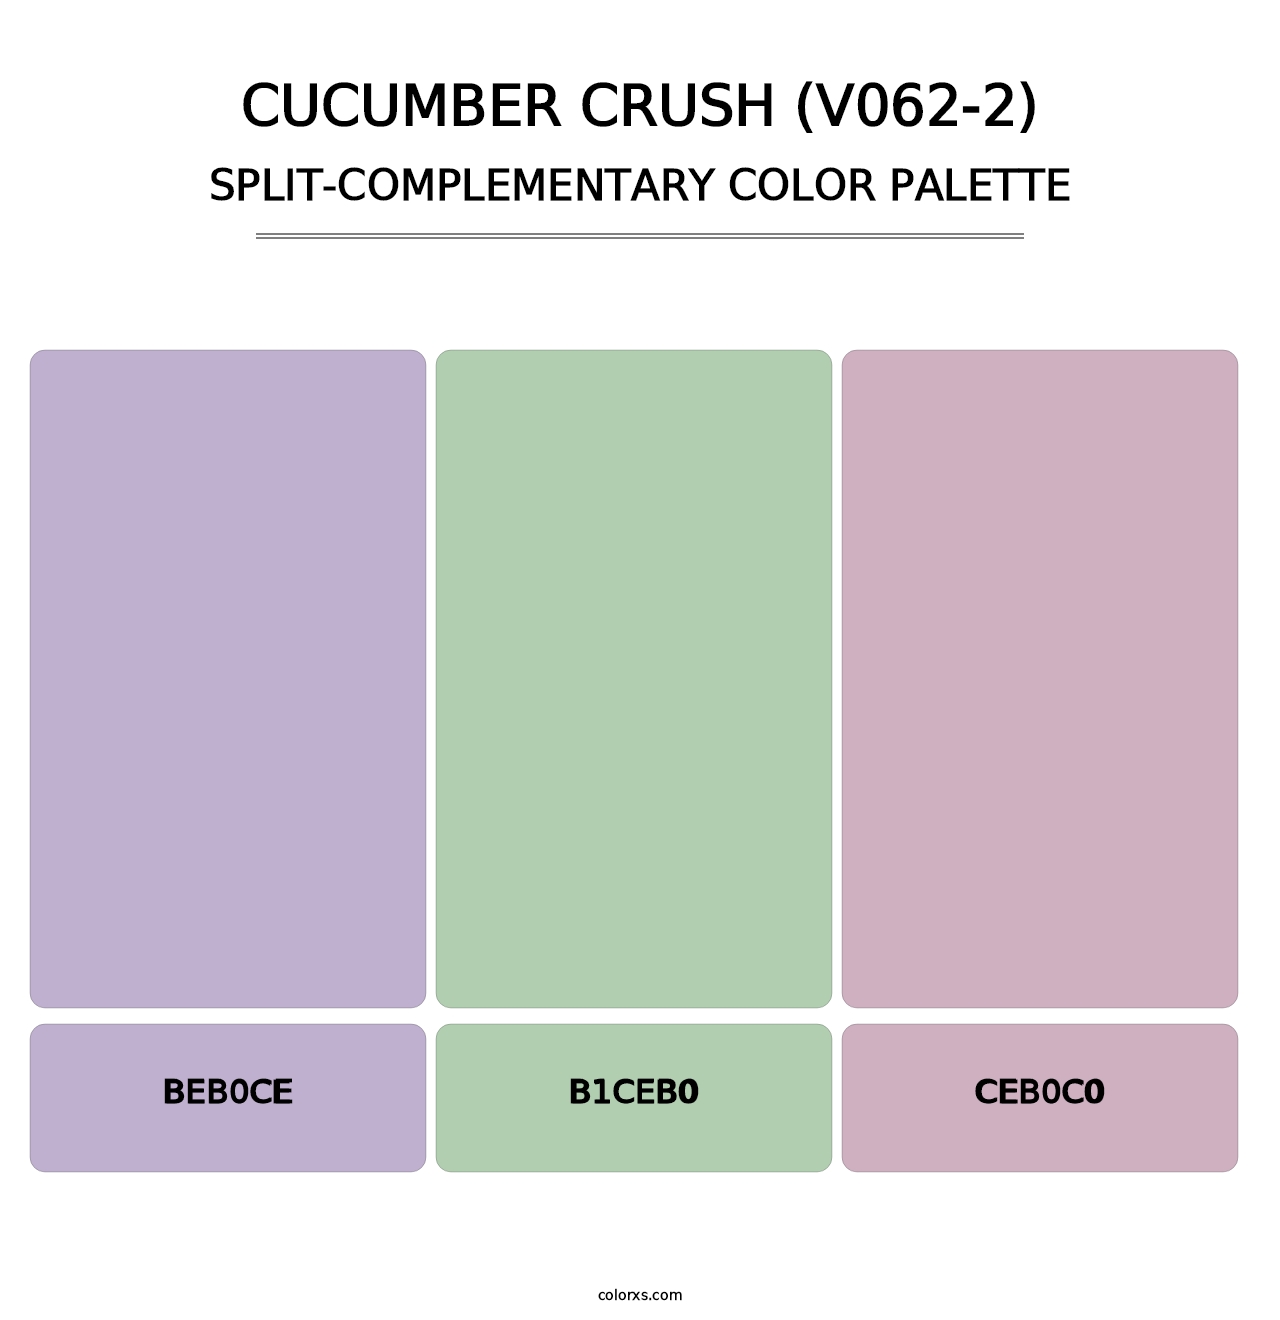 Cucumber Crush (V062-2) - Split-Complementary Color Palette